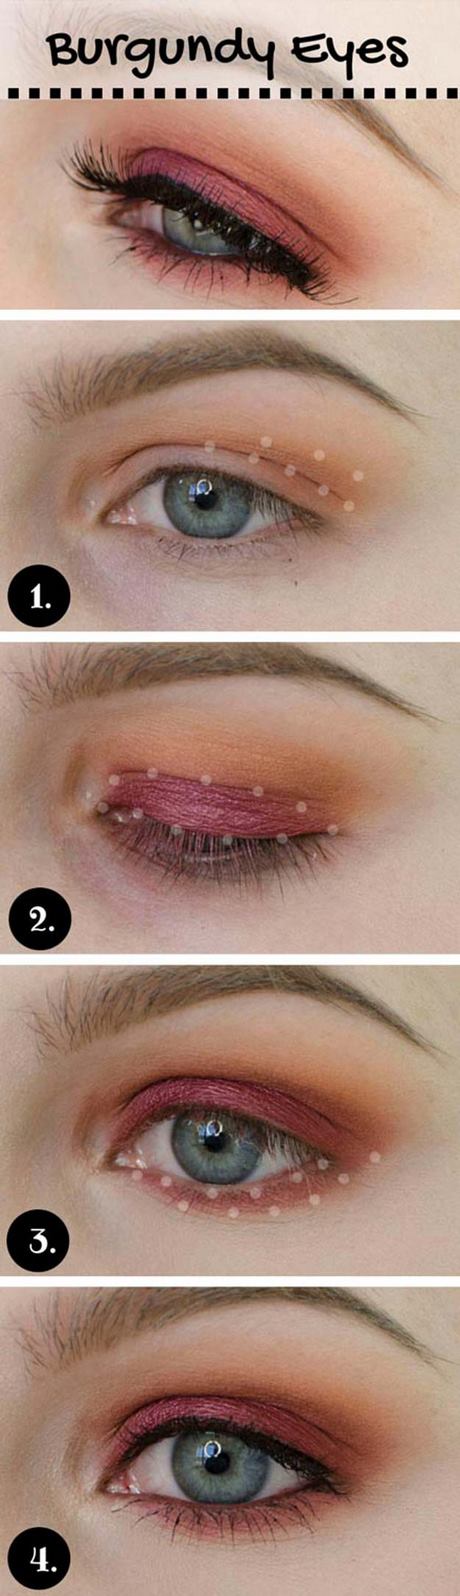 makeup-tips-for-eyeshadow-32_2 Make-up tips voor eyeshadow